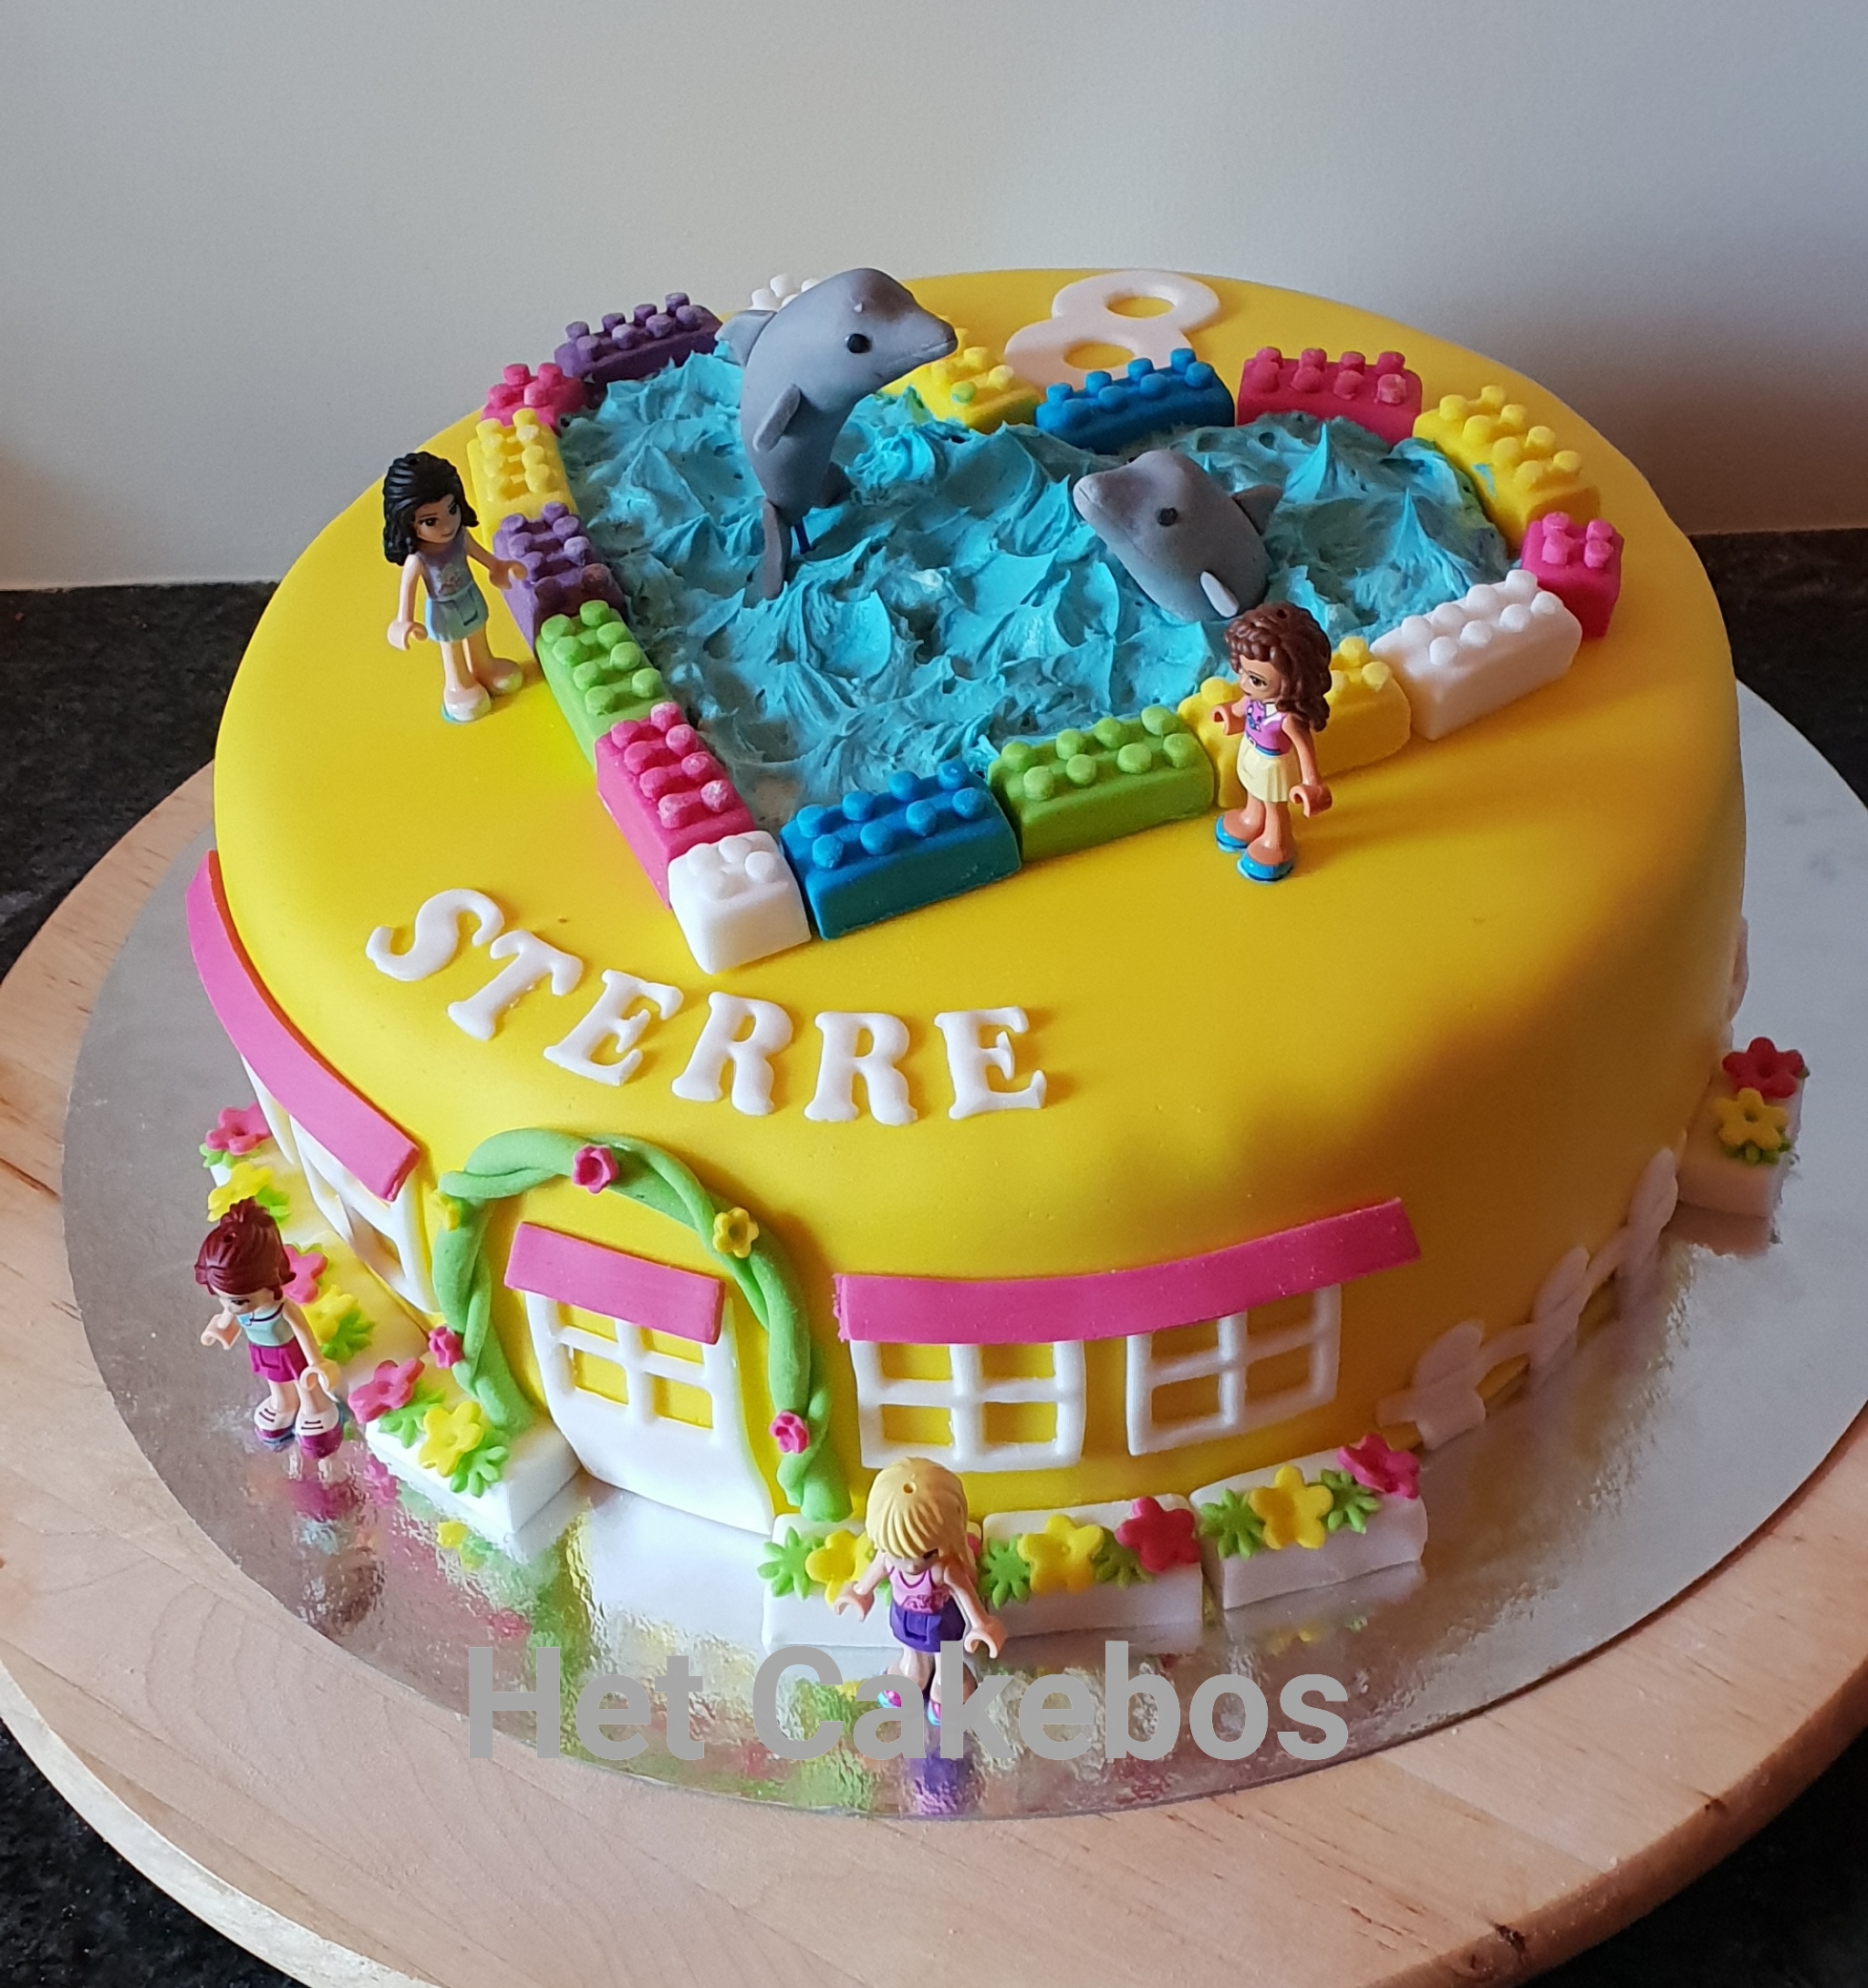 Hedendaags Lego-Friends taart – Het Cakebos NH-34